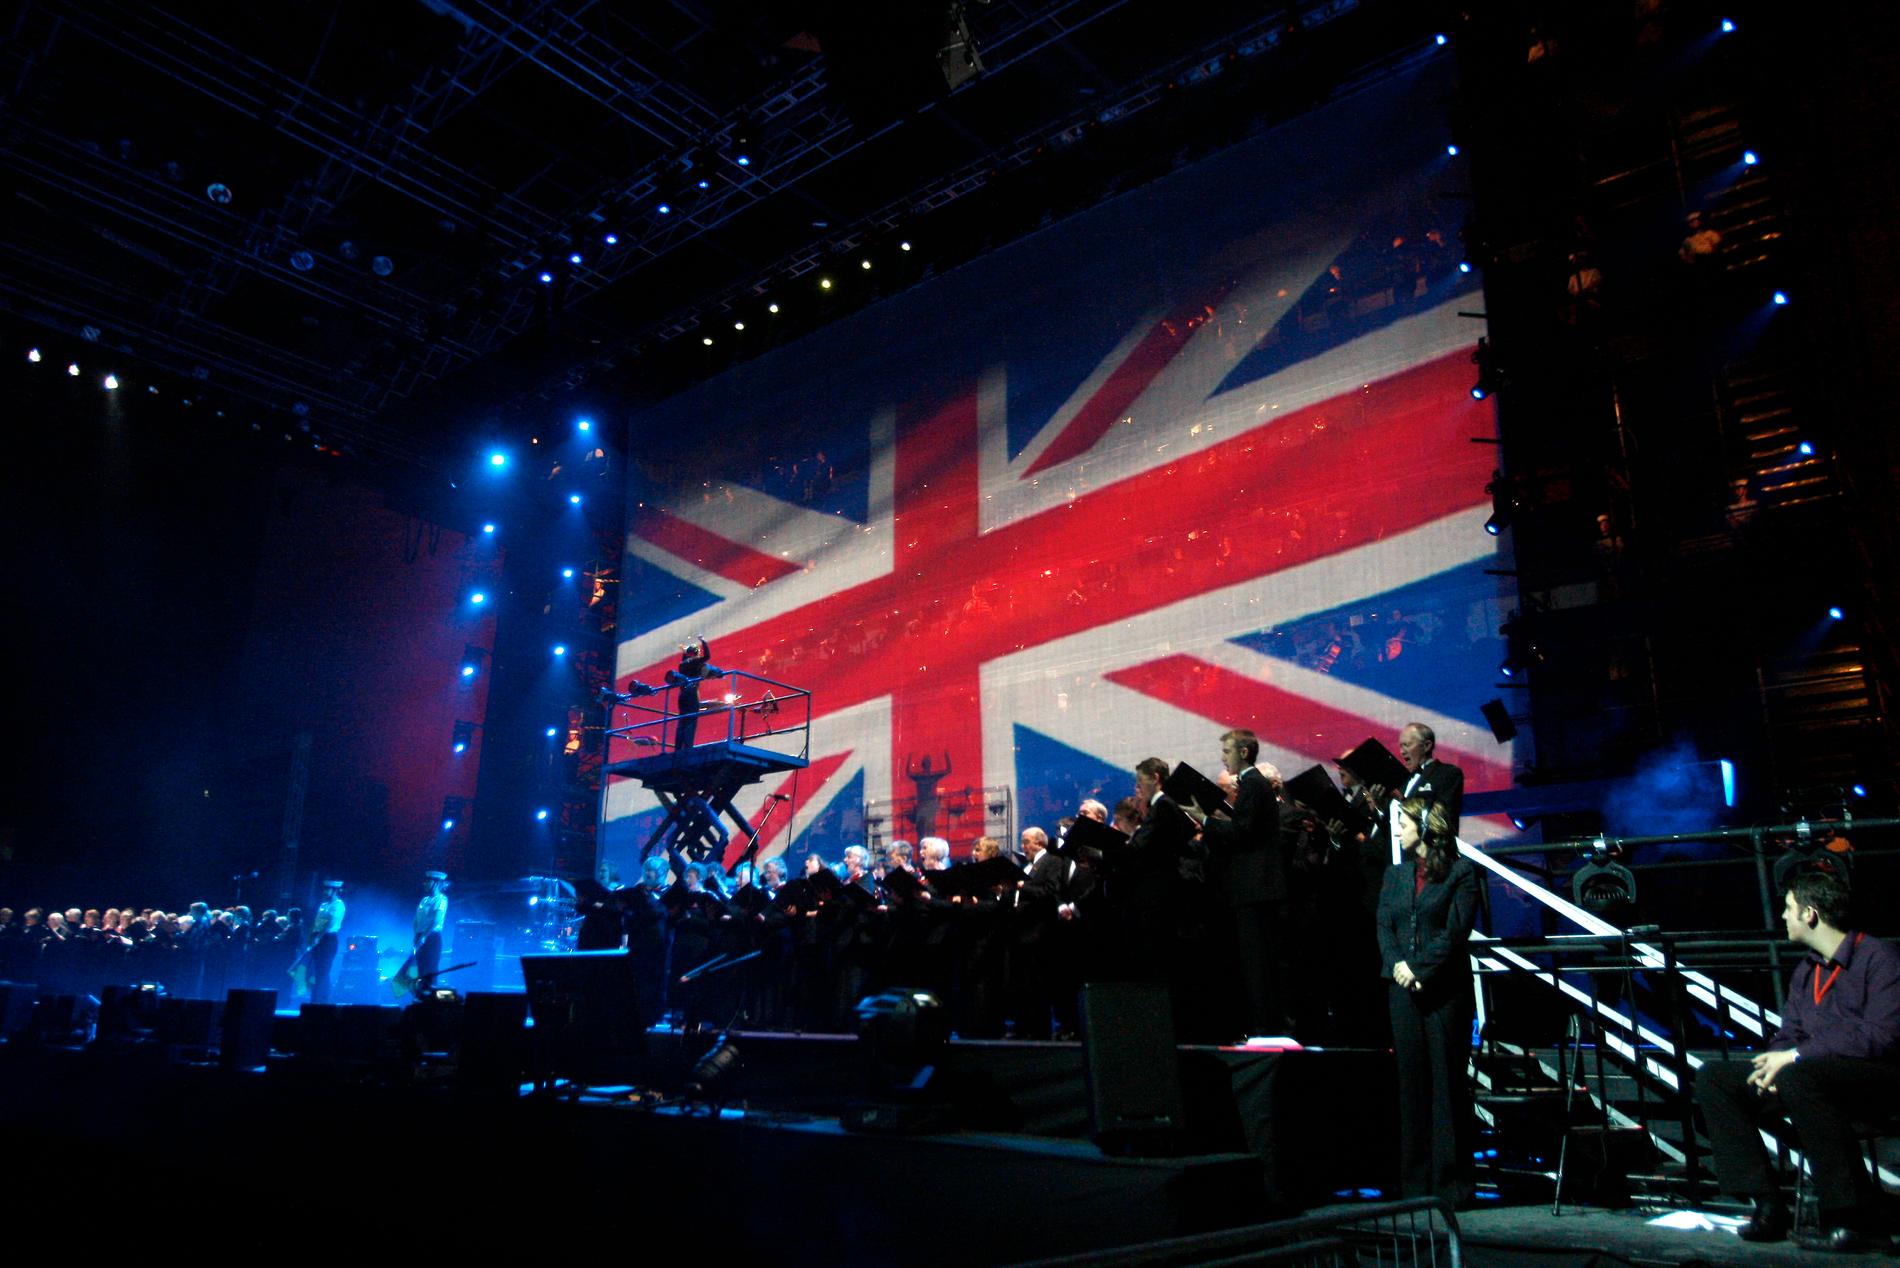 Scenen vid ett tidigare arrangemang i Liverpool Arena. Arkivbild.